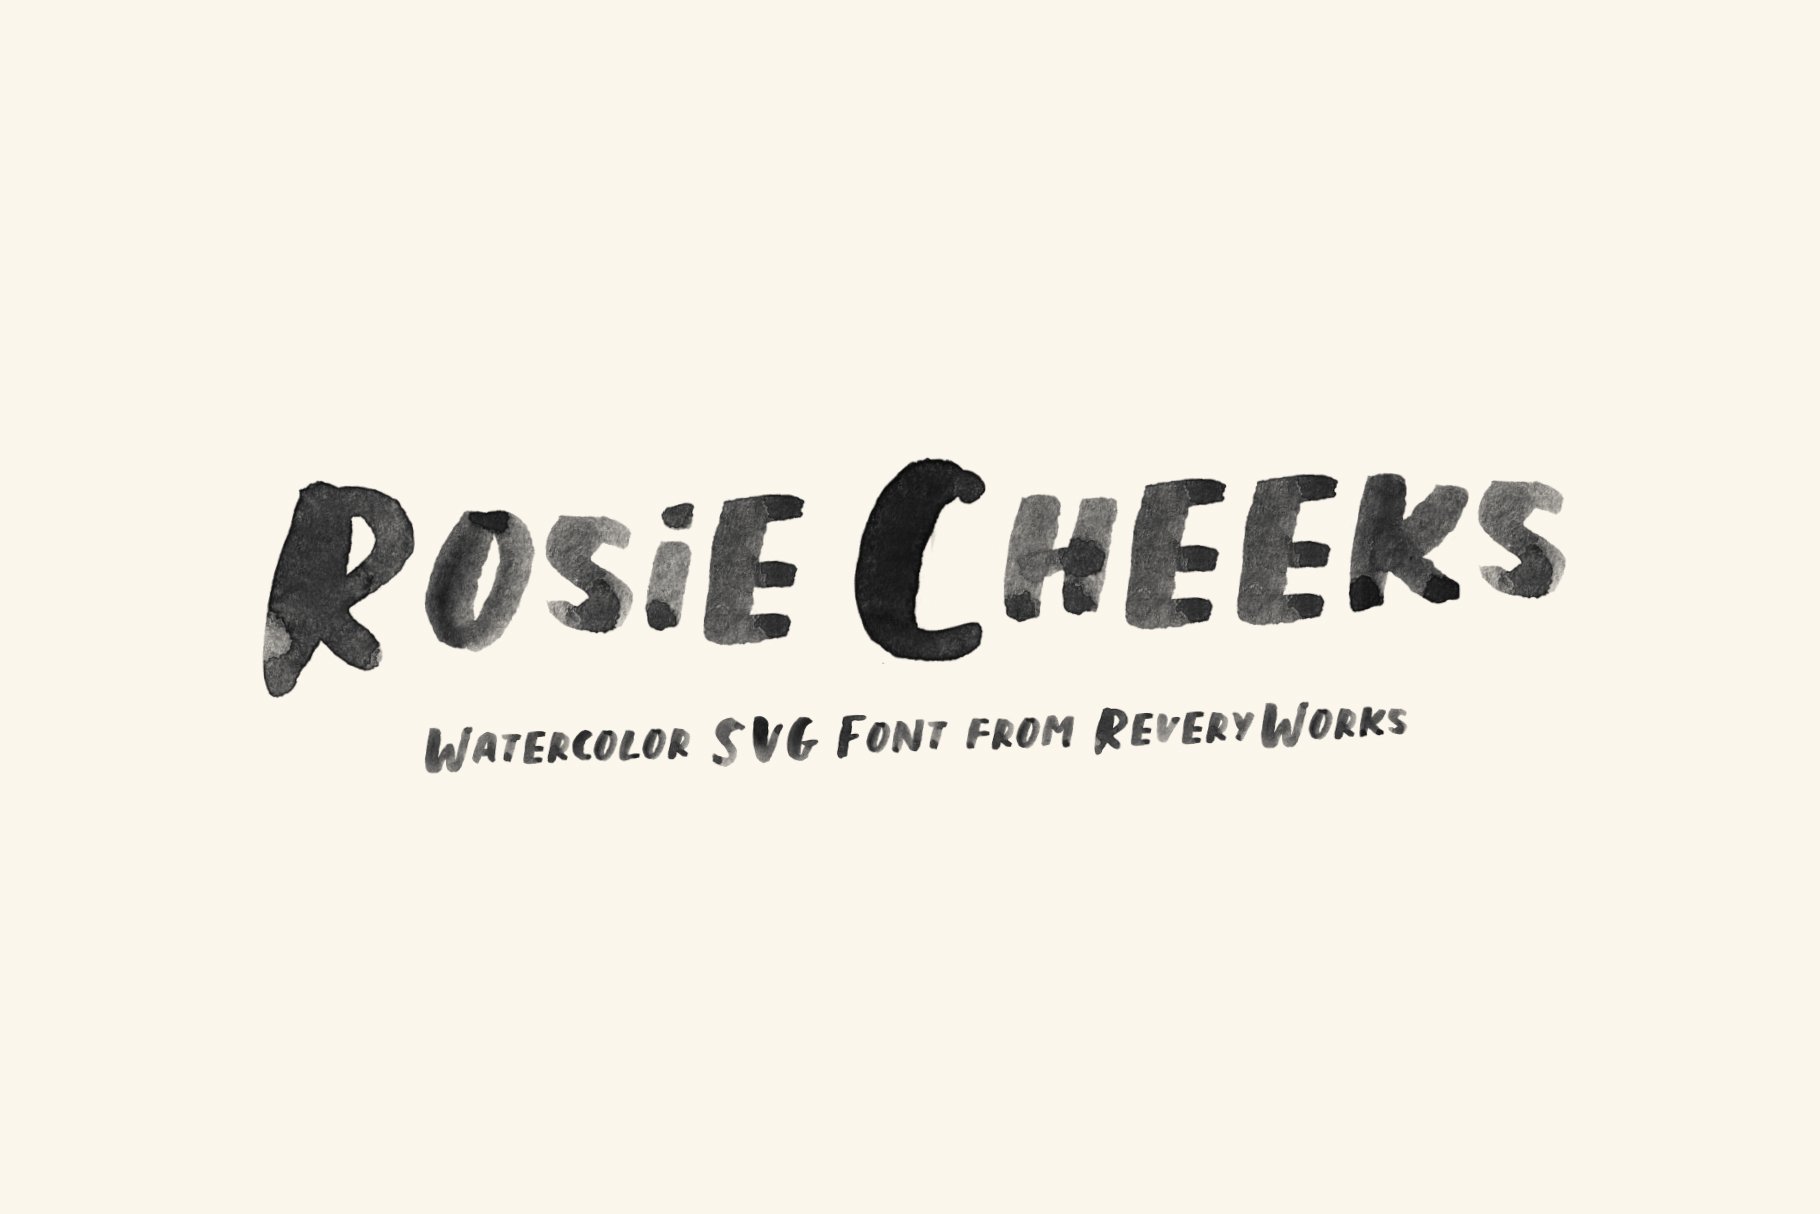 Rosie Cheeks Font - SVG & Regular cover image.